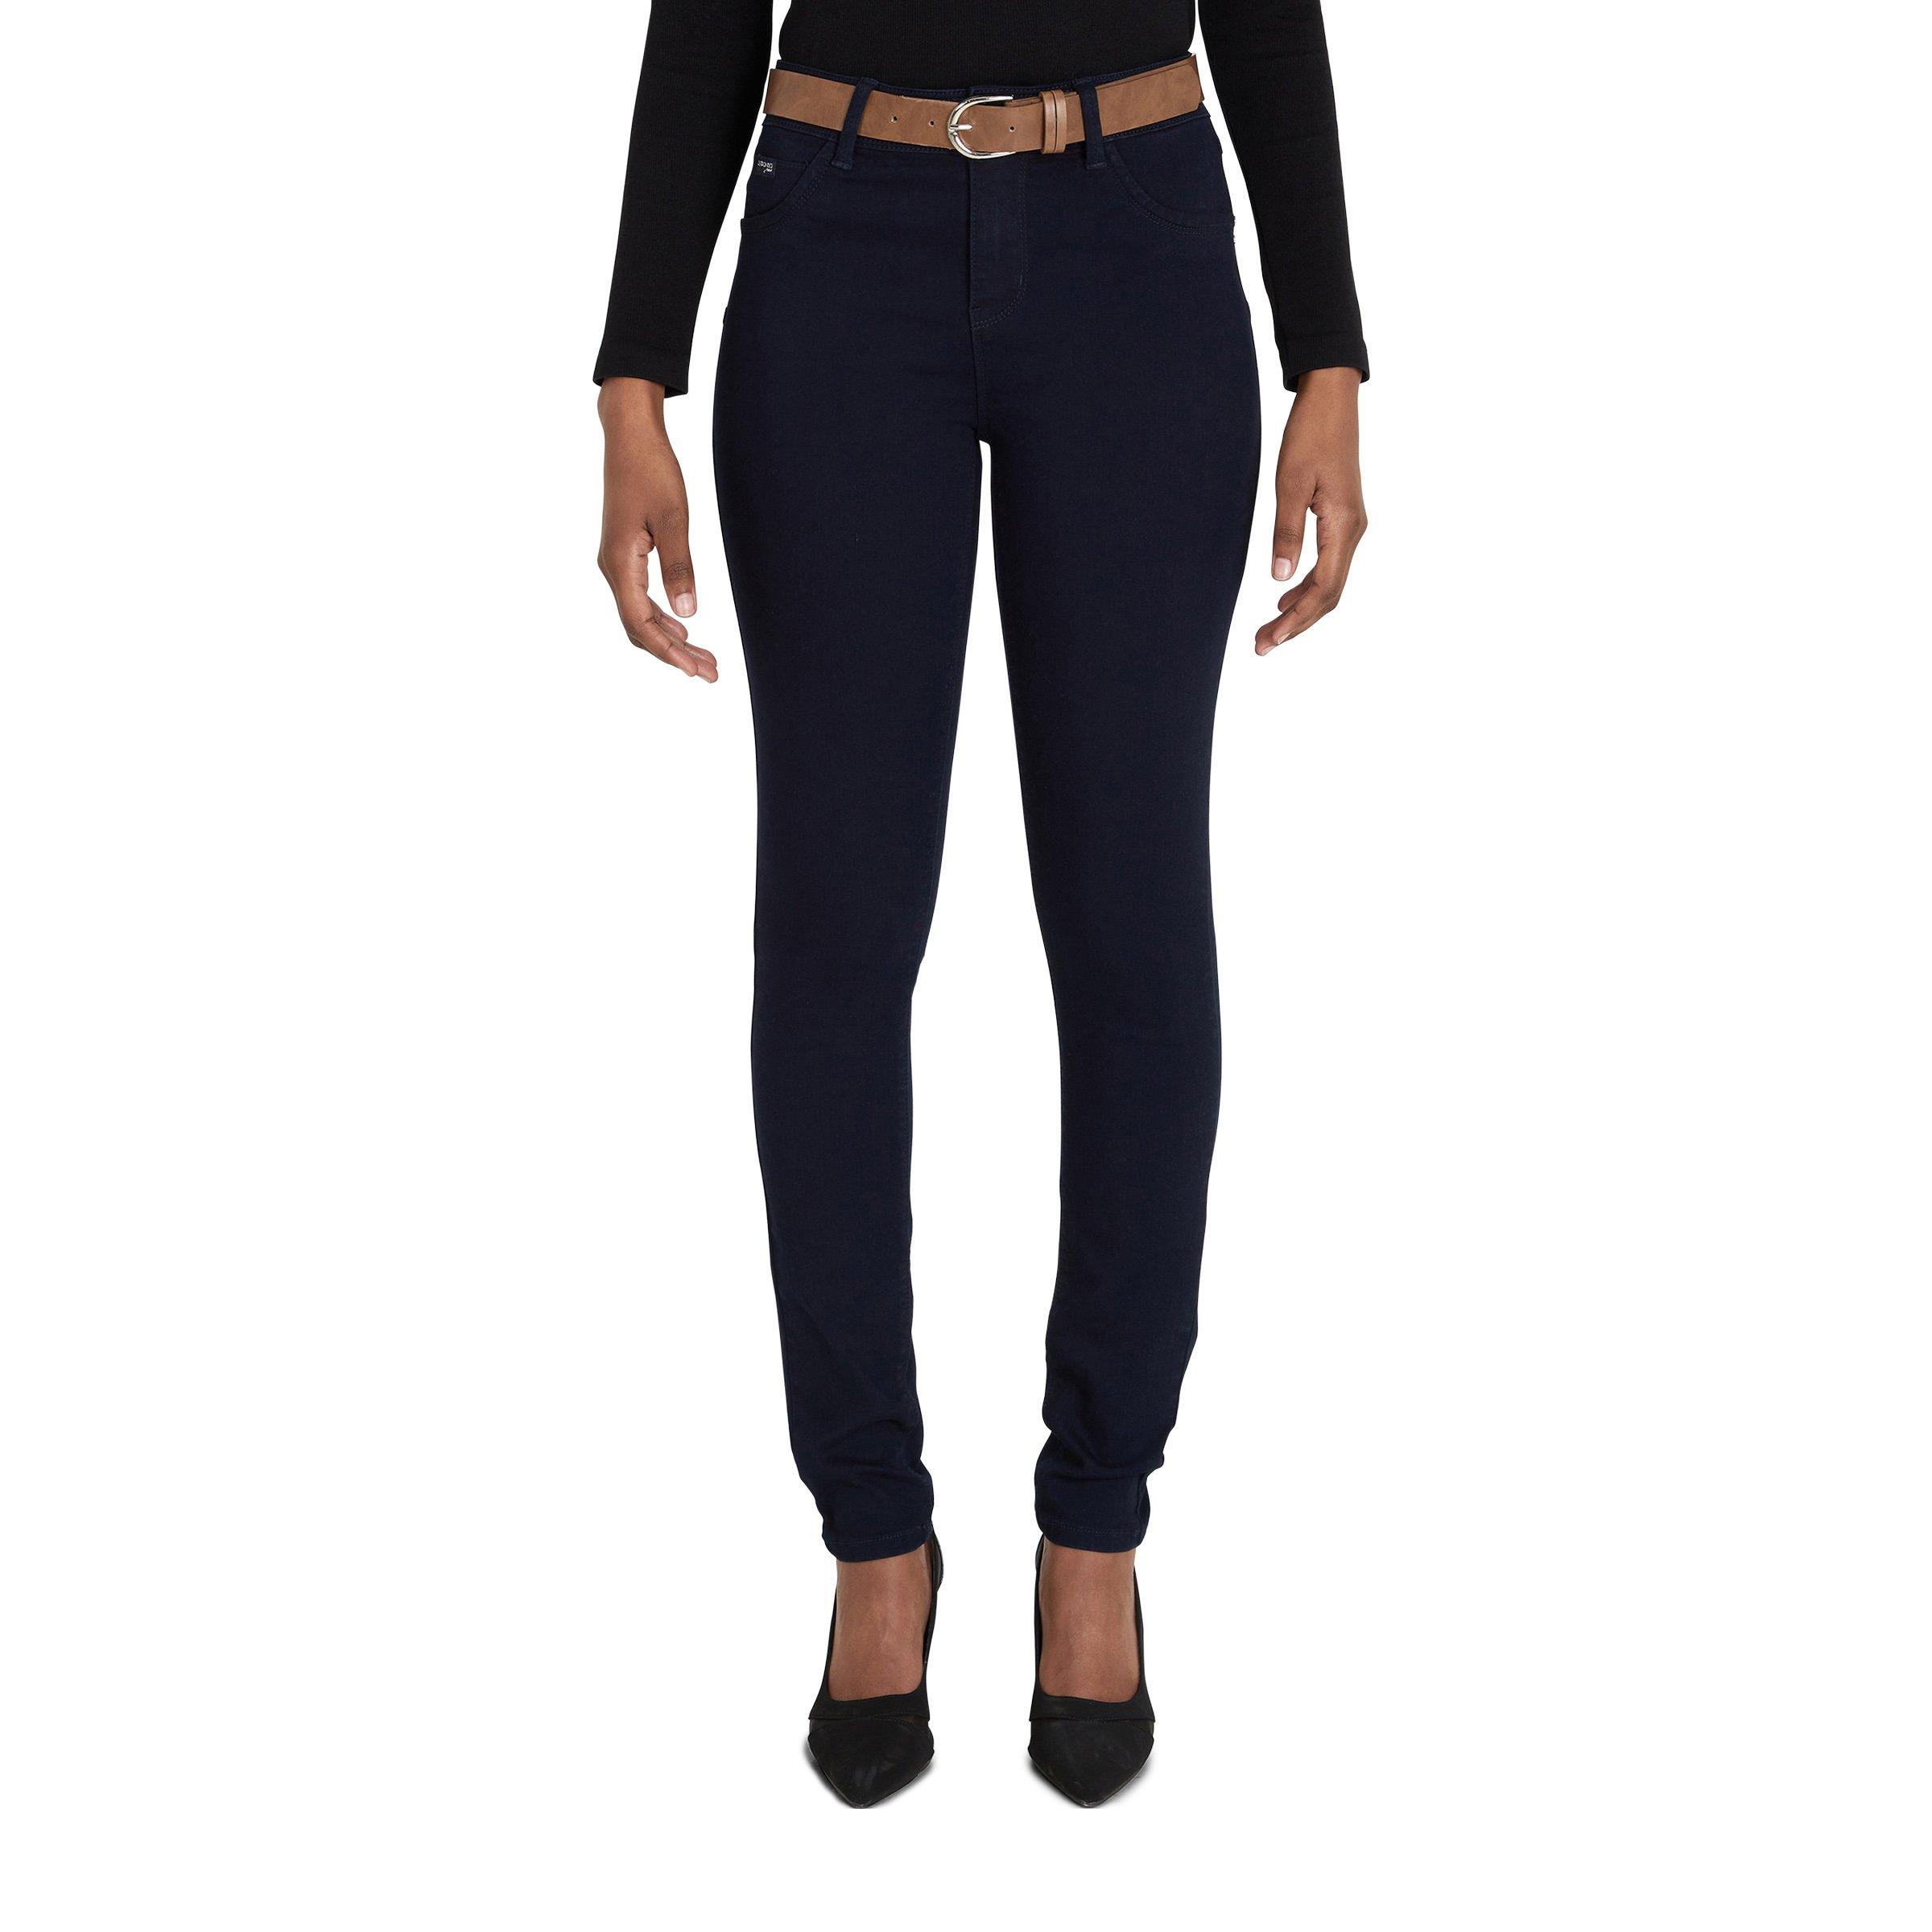 Buy OBR Indigo Super Skinny Jeans Online | Truworths